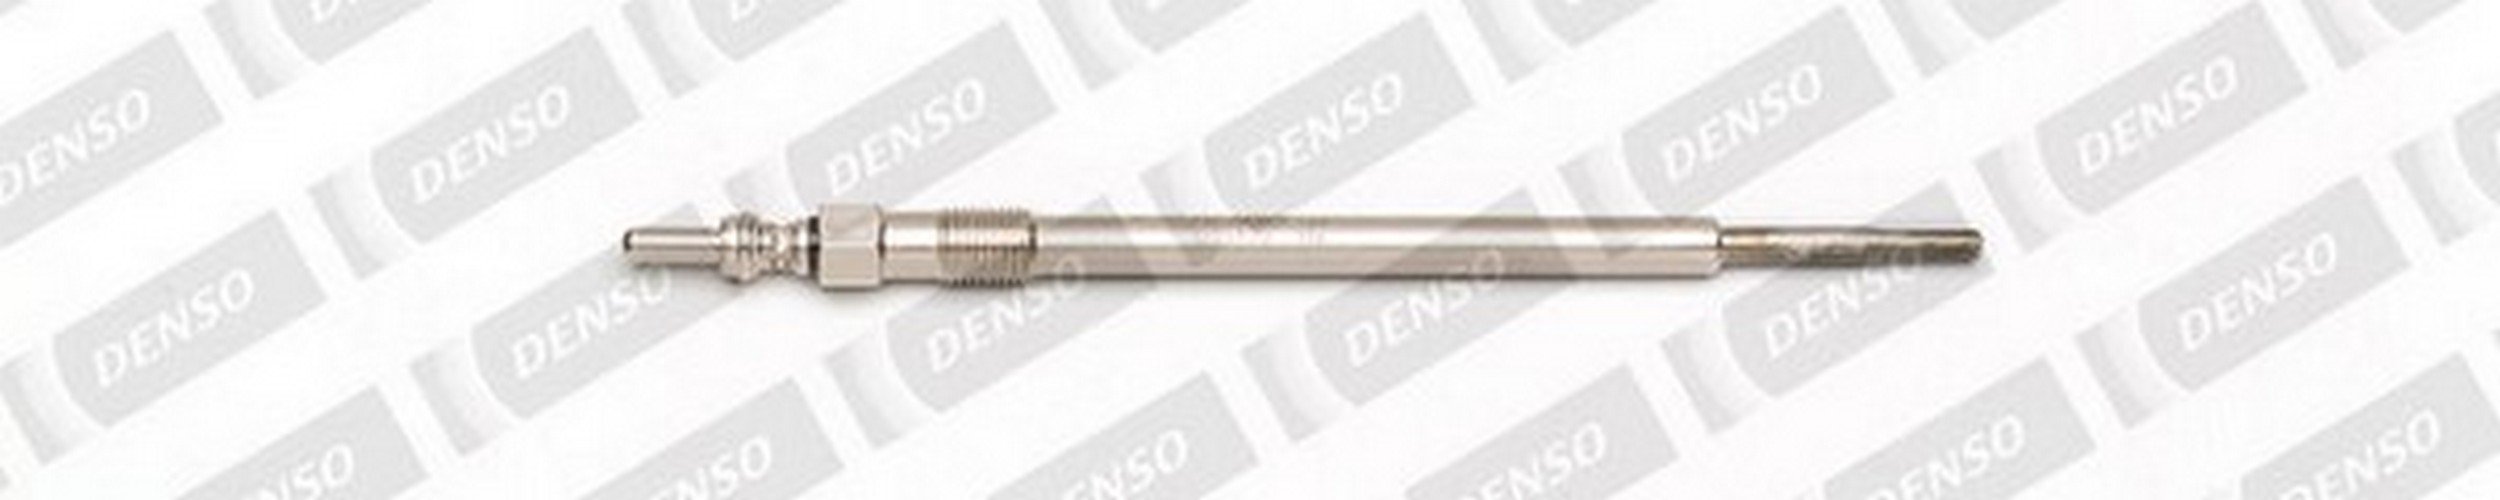 DENSO-AU DG-170